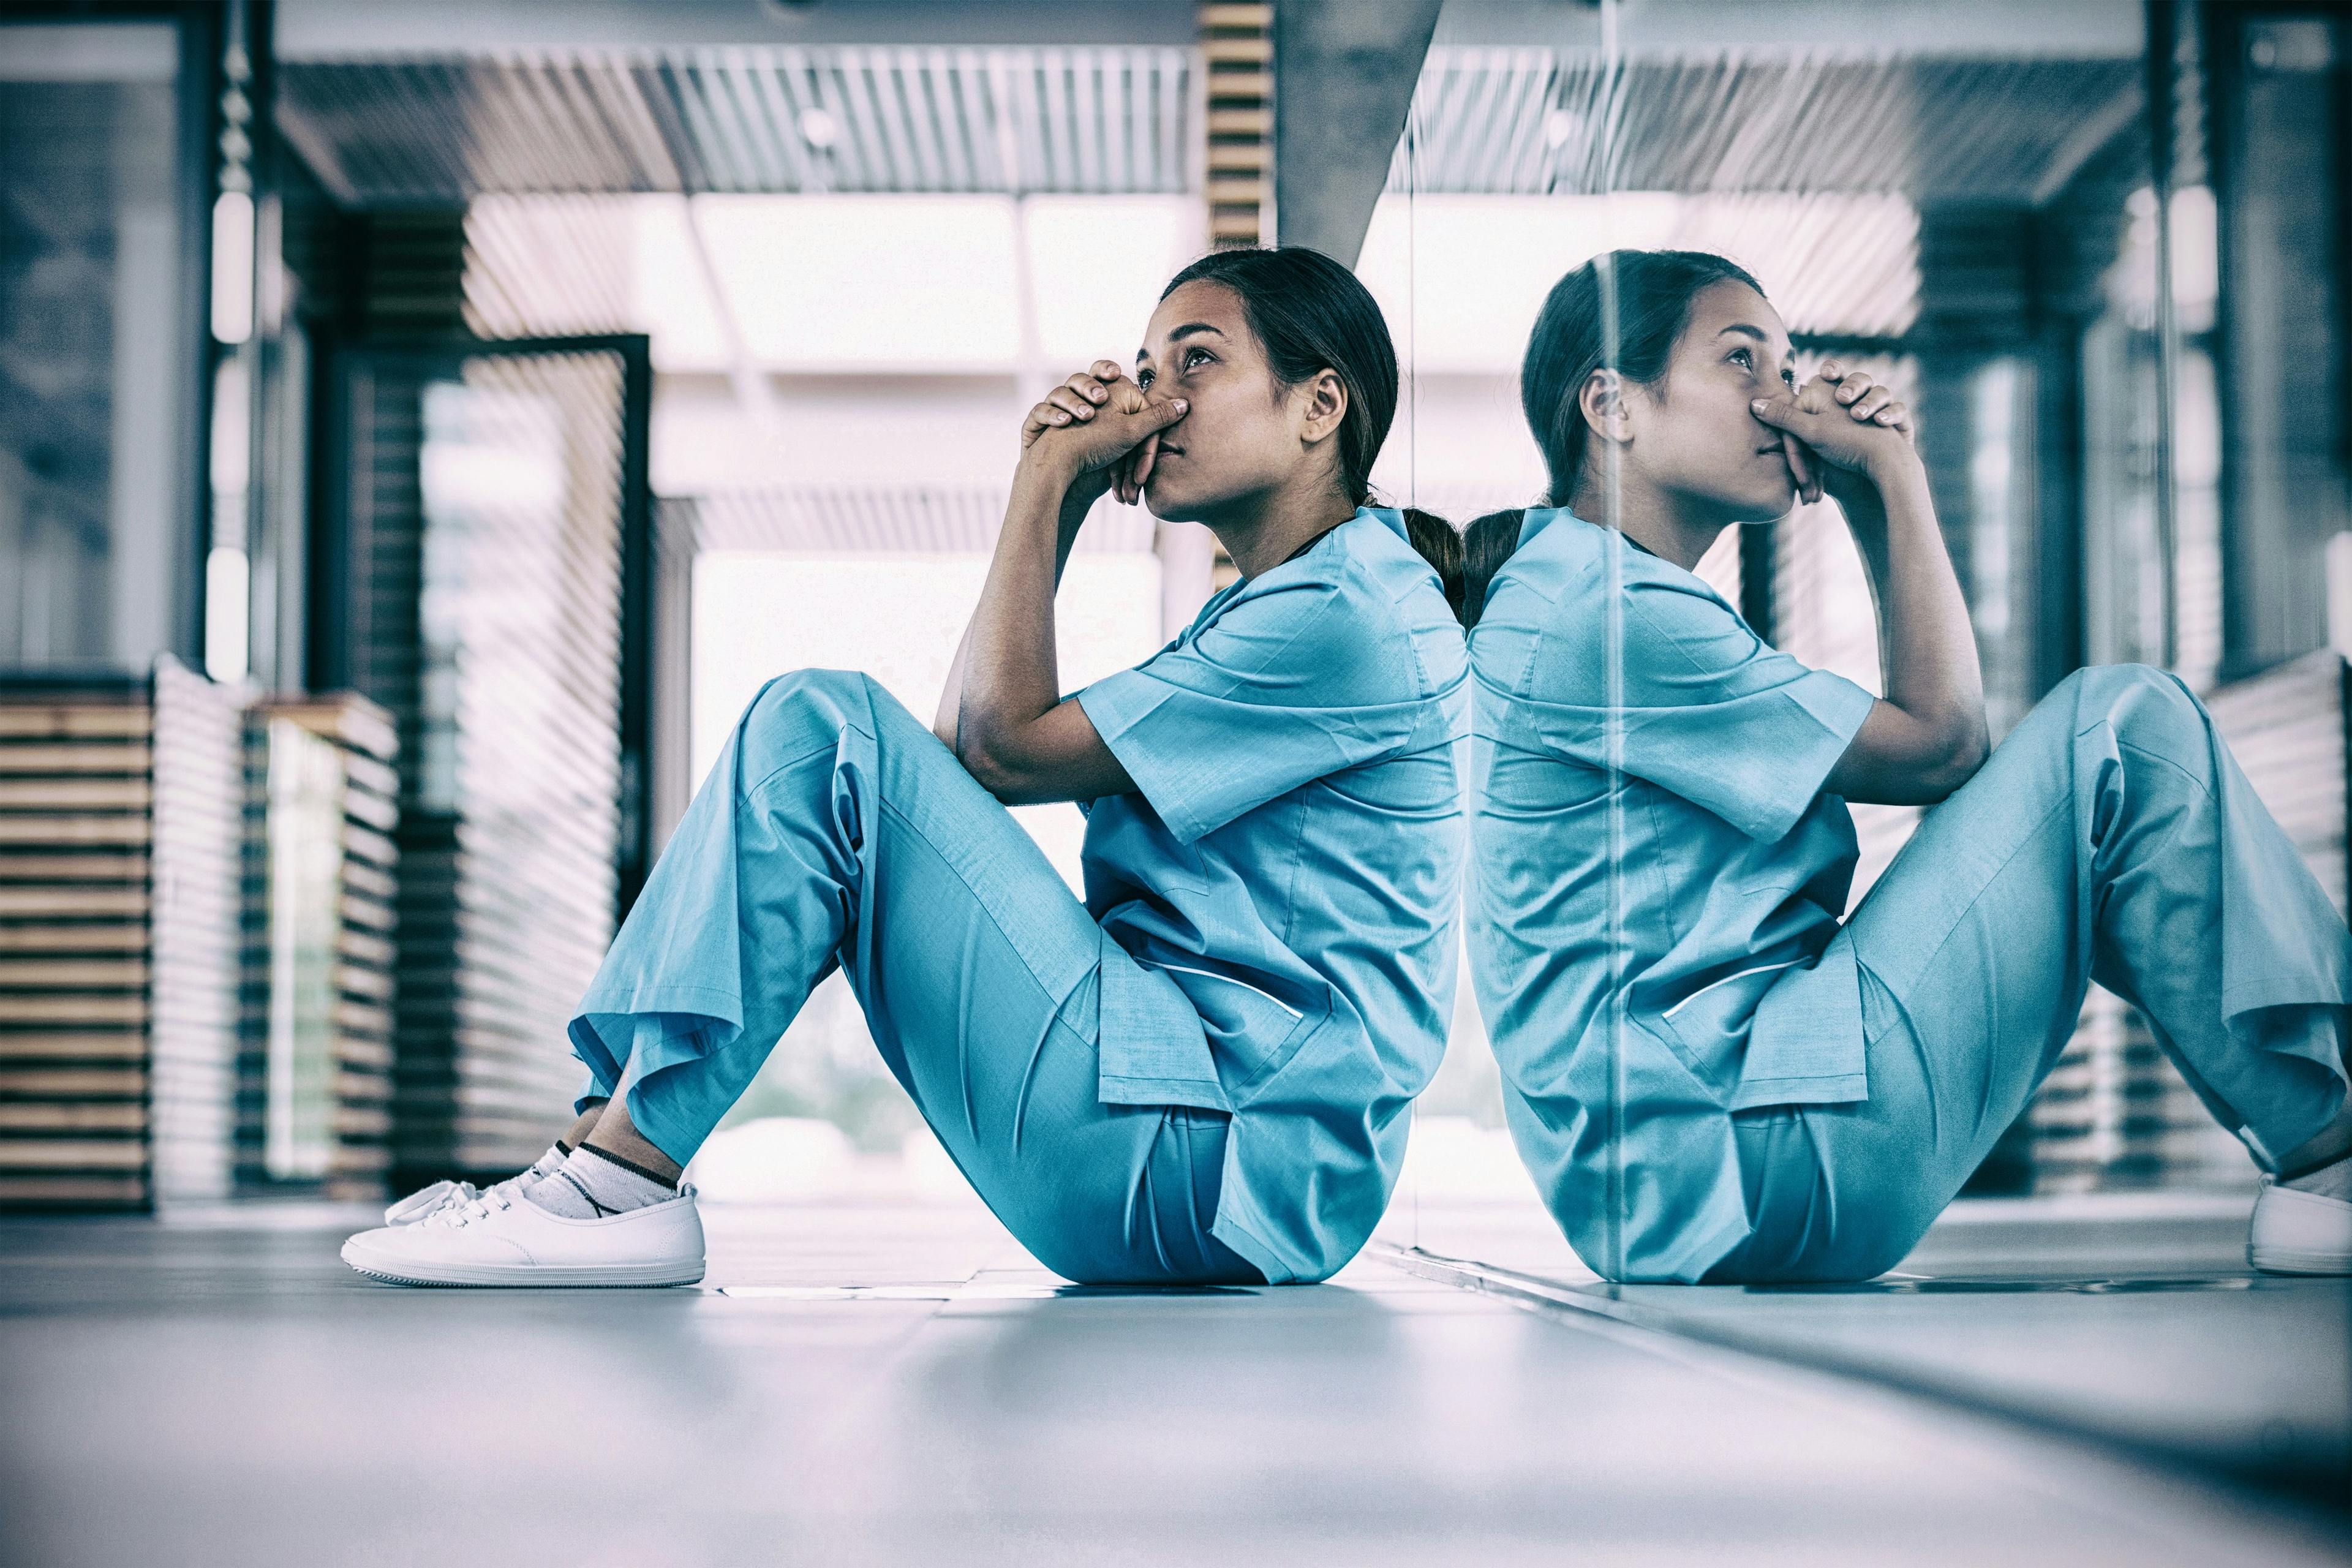 Should hospital nurses be working 12-hour shifts?